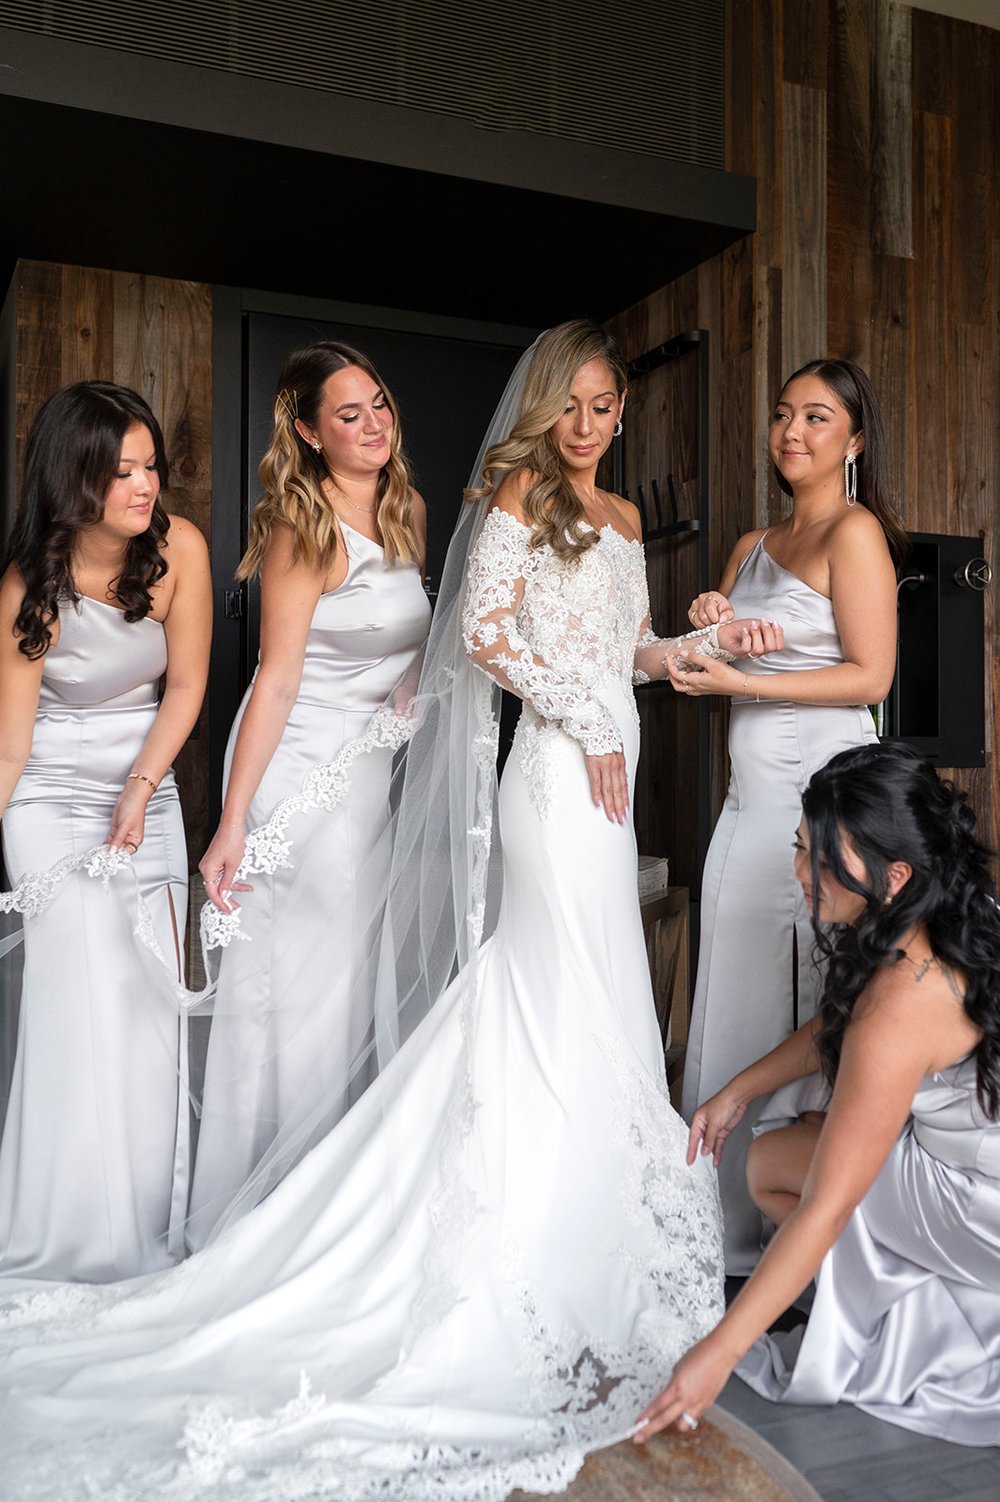  bridal party photos with bridesmaids 